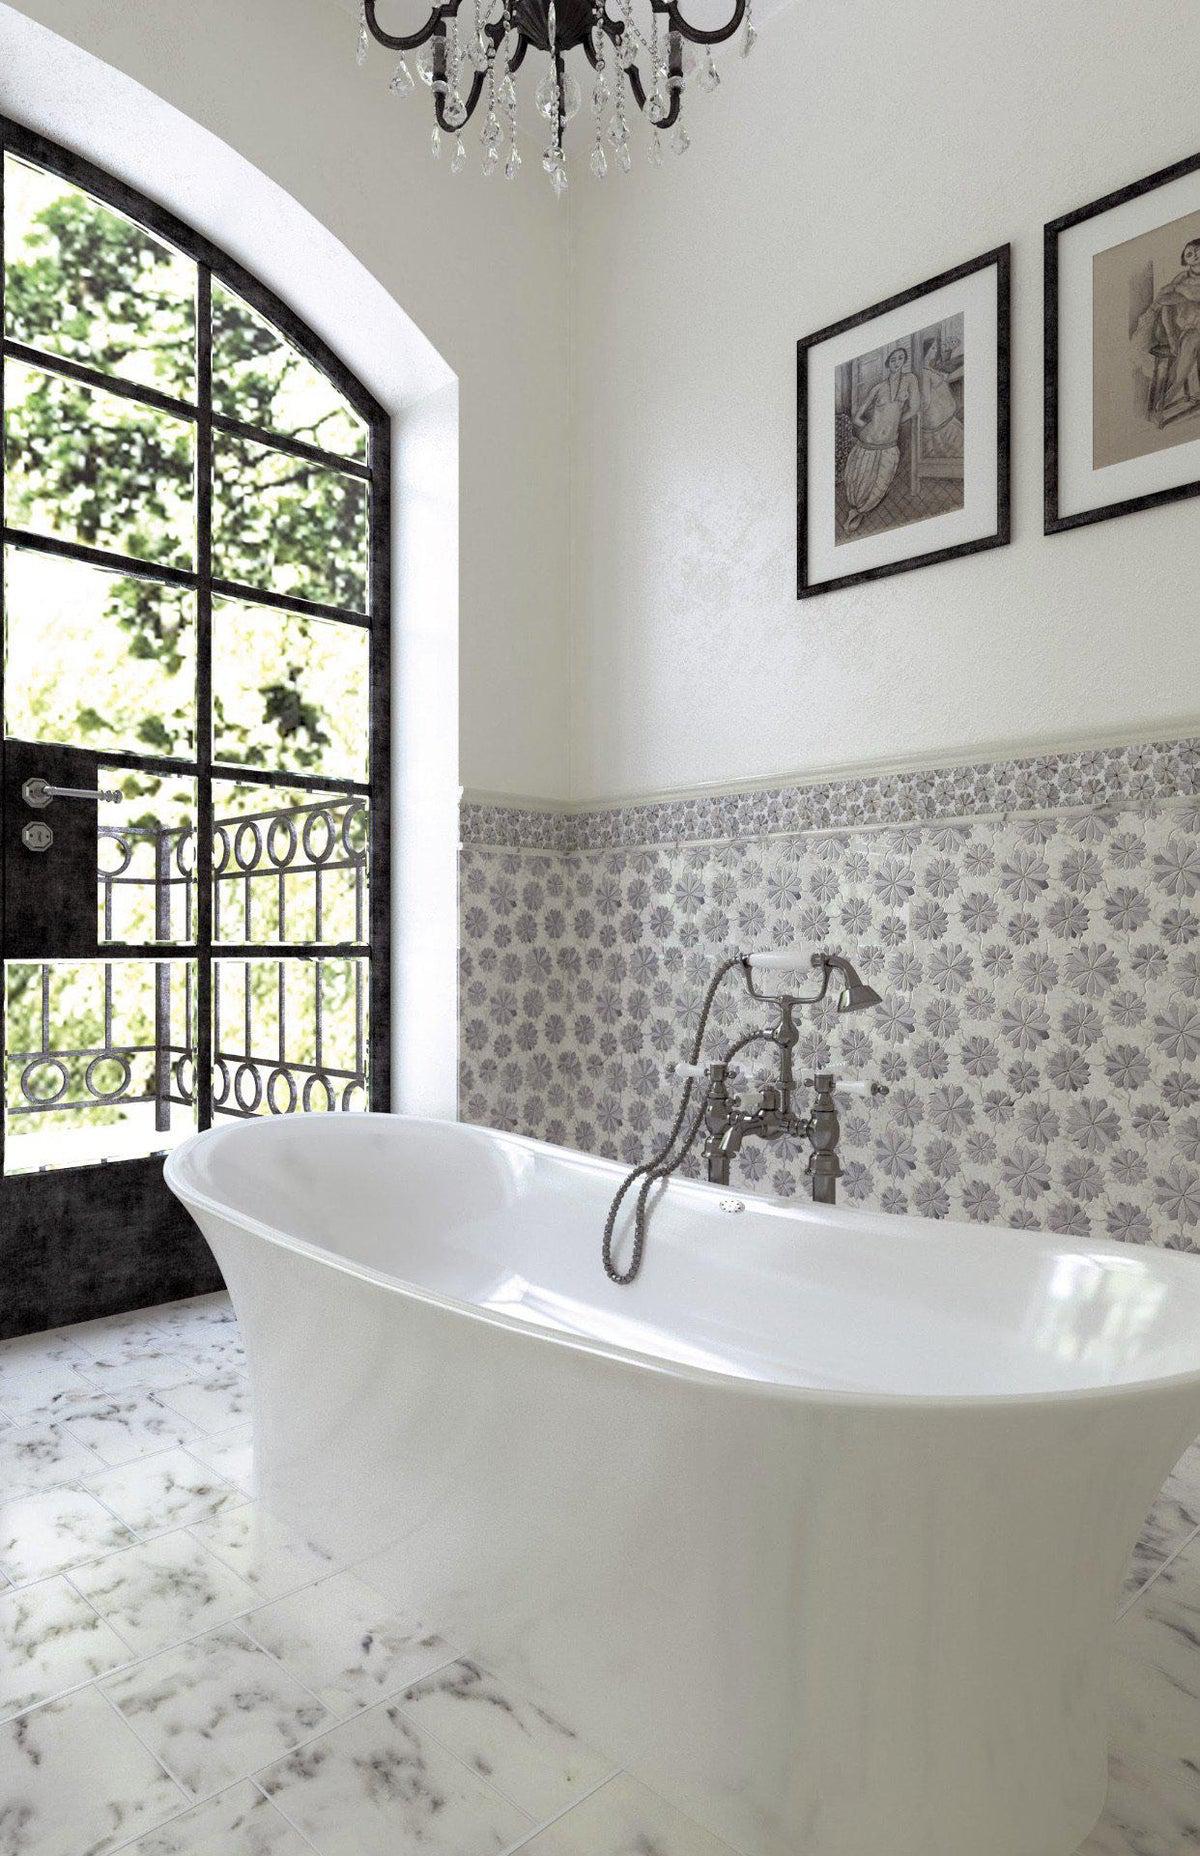 floral mosaic bathroom tiled tub surround